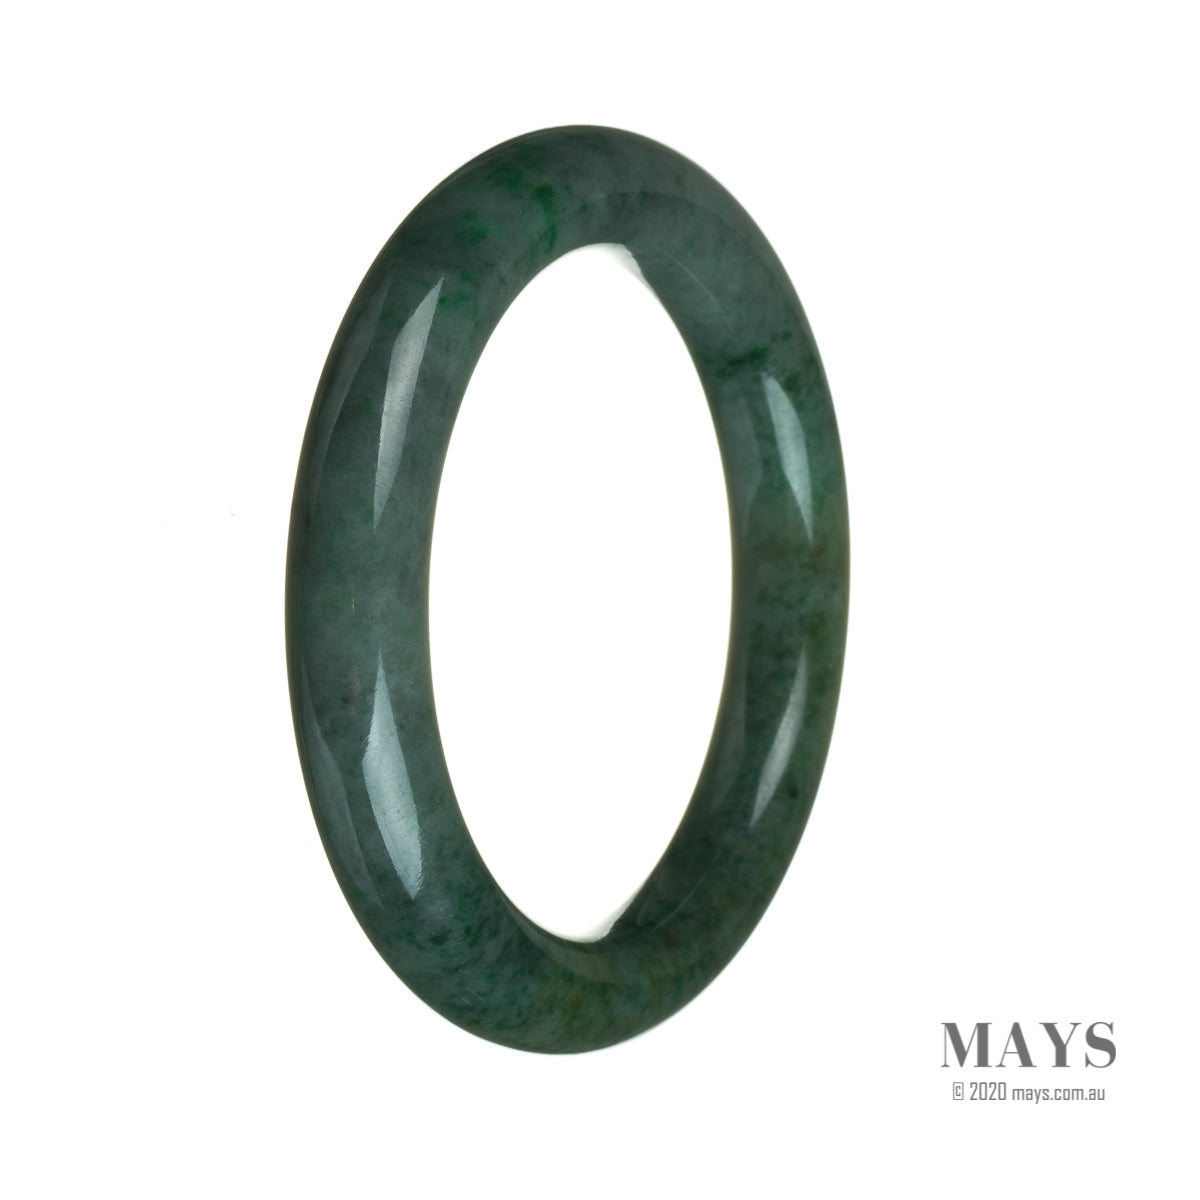 A round, 61mm genuine Type A deep green Burma jade bangle bracelet from MAYS GEMS.